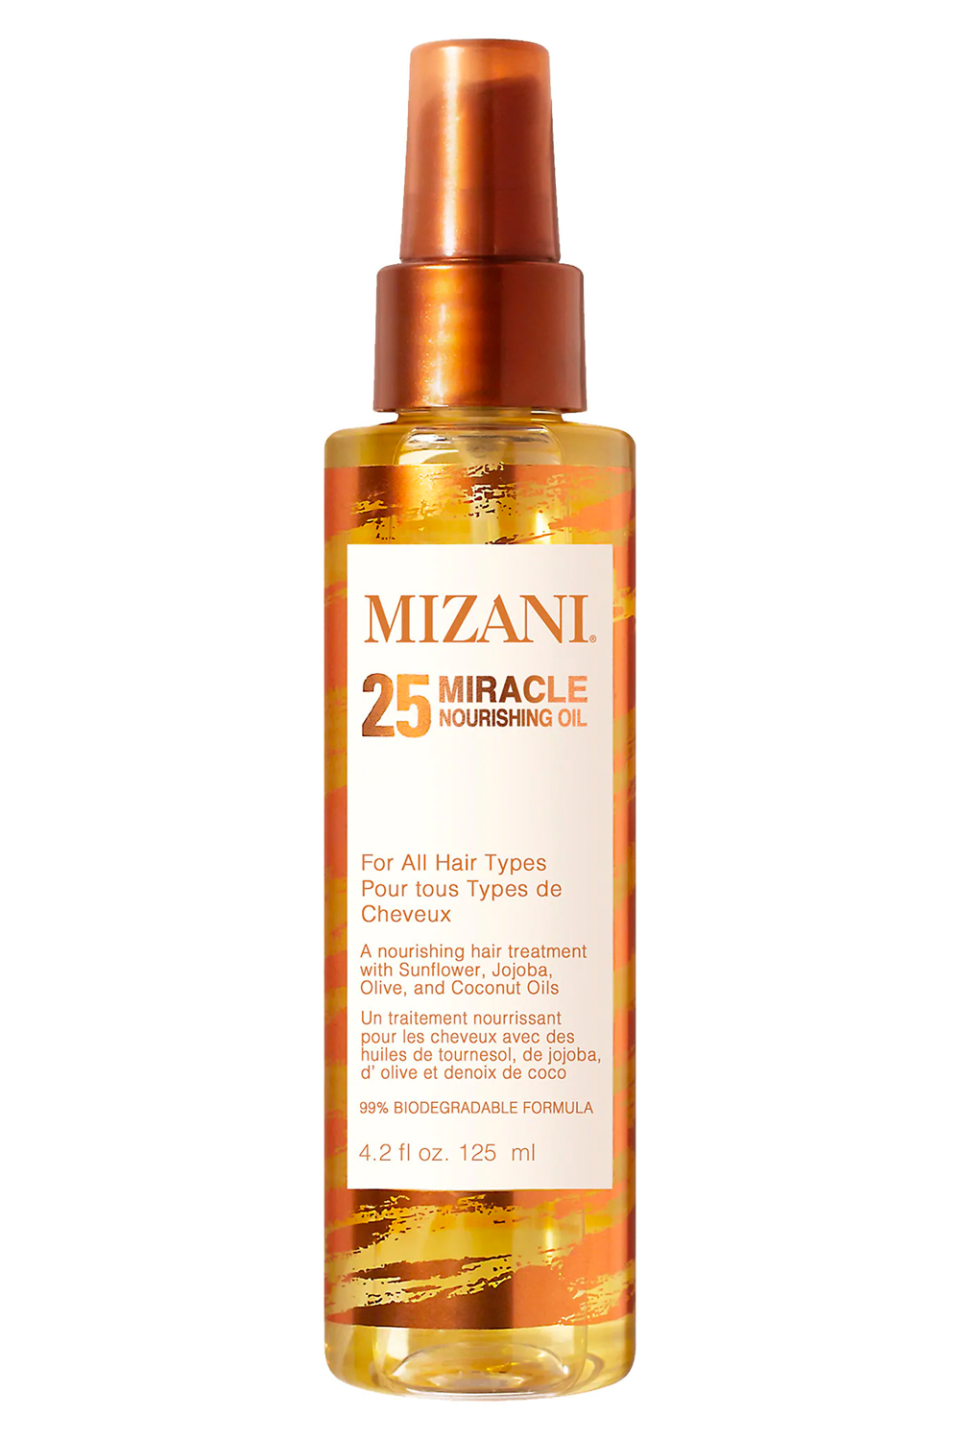 8) Mizani 25 Miracle Nourishing Oil